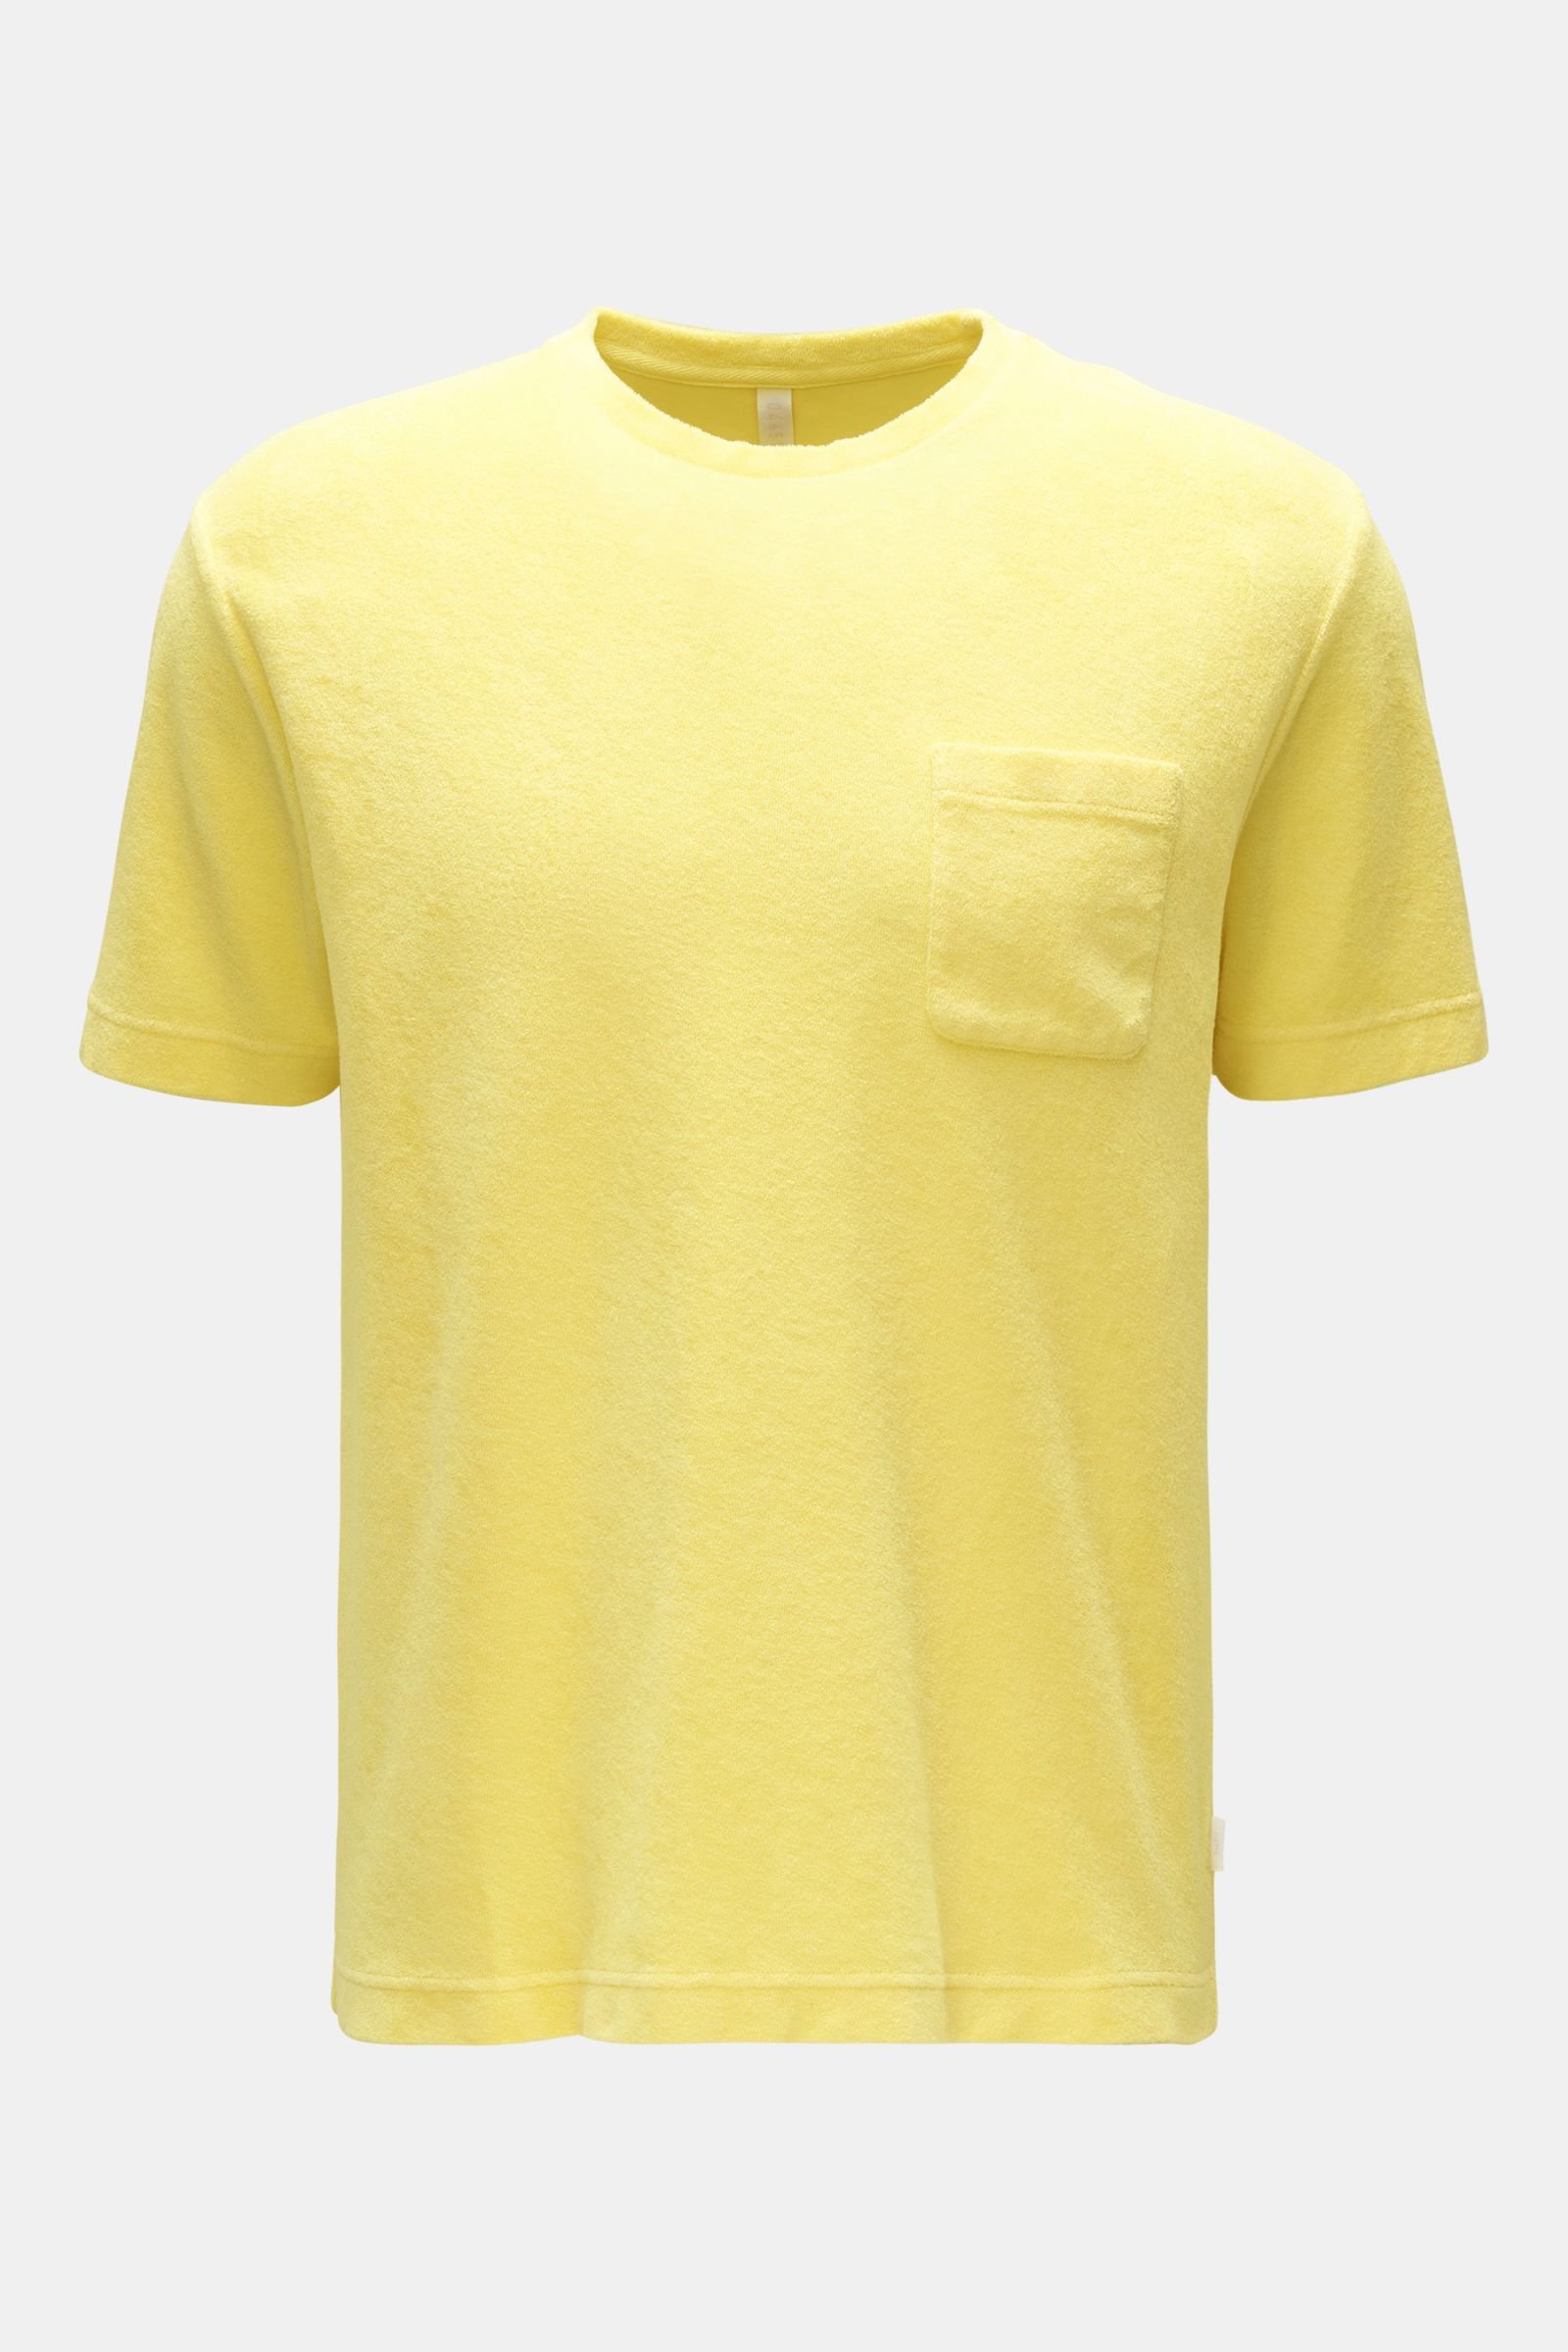 Terry crew neck T-shirt 'Terry Tee' yellow